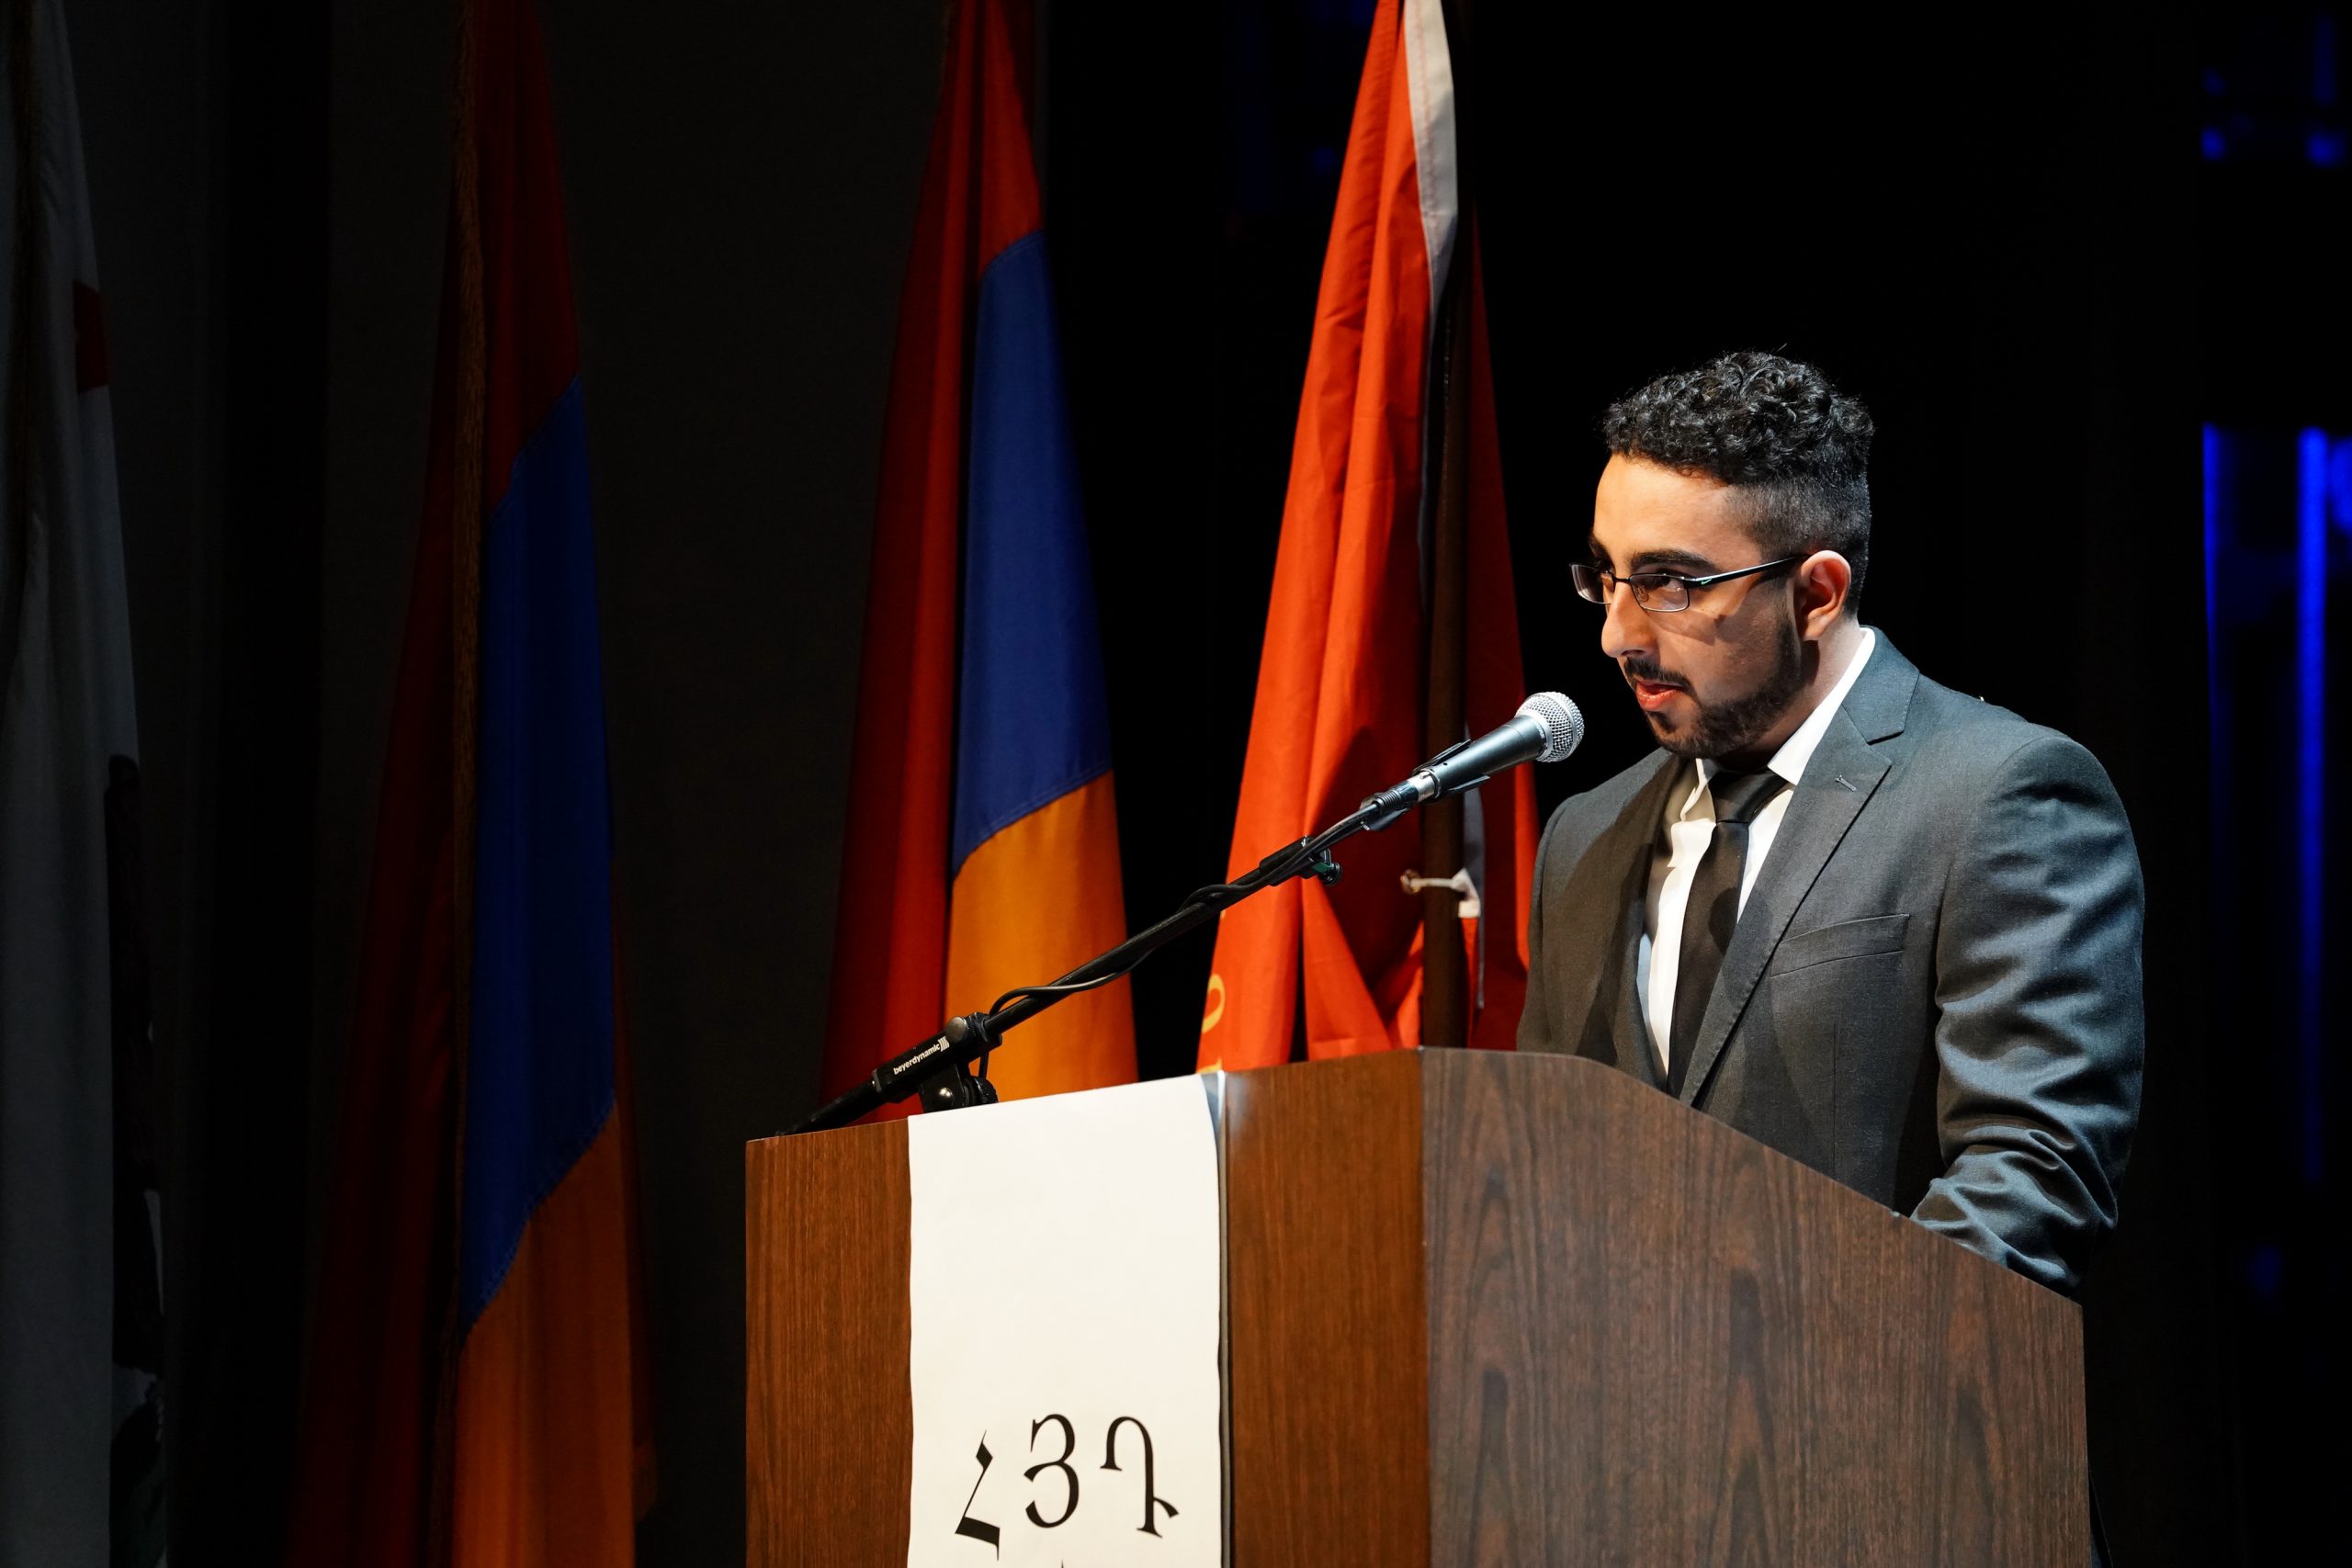 Nareg Kuyumjian's speech on behalf of the Armenian Youth Federation Western United States